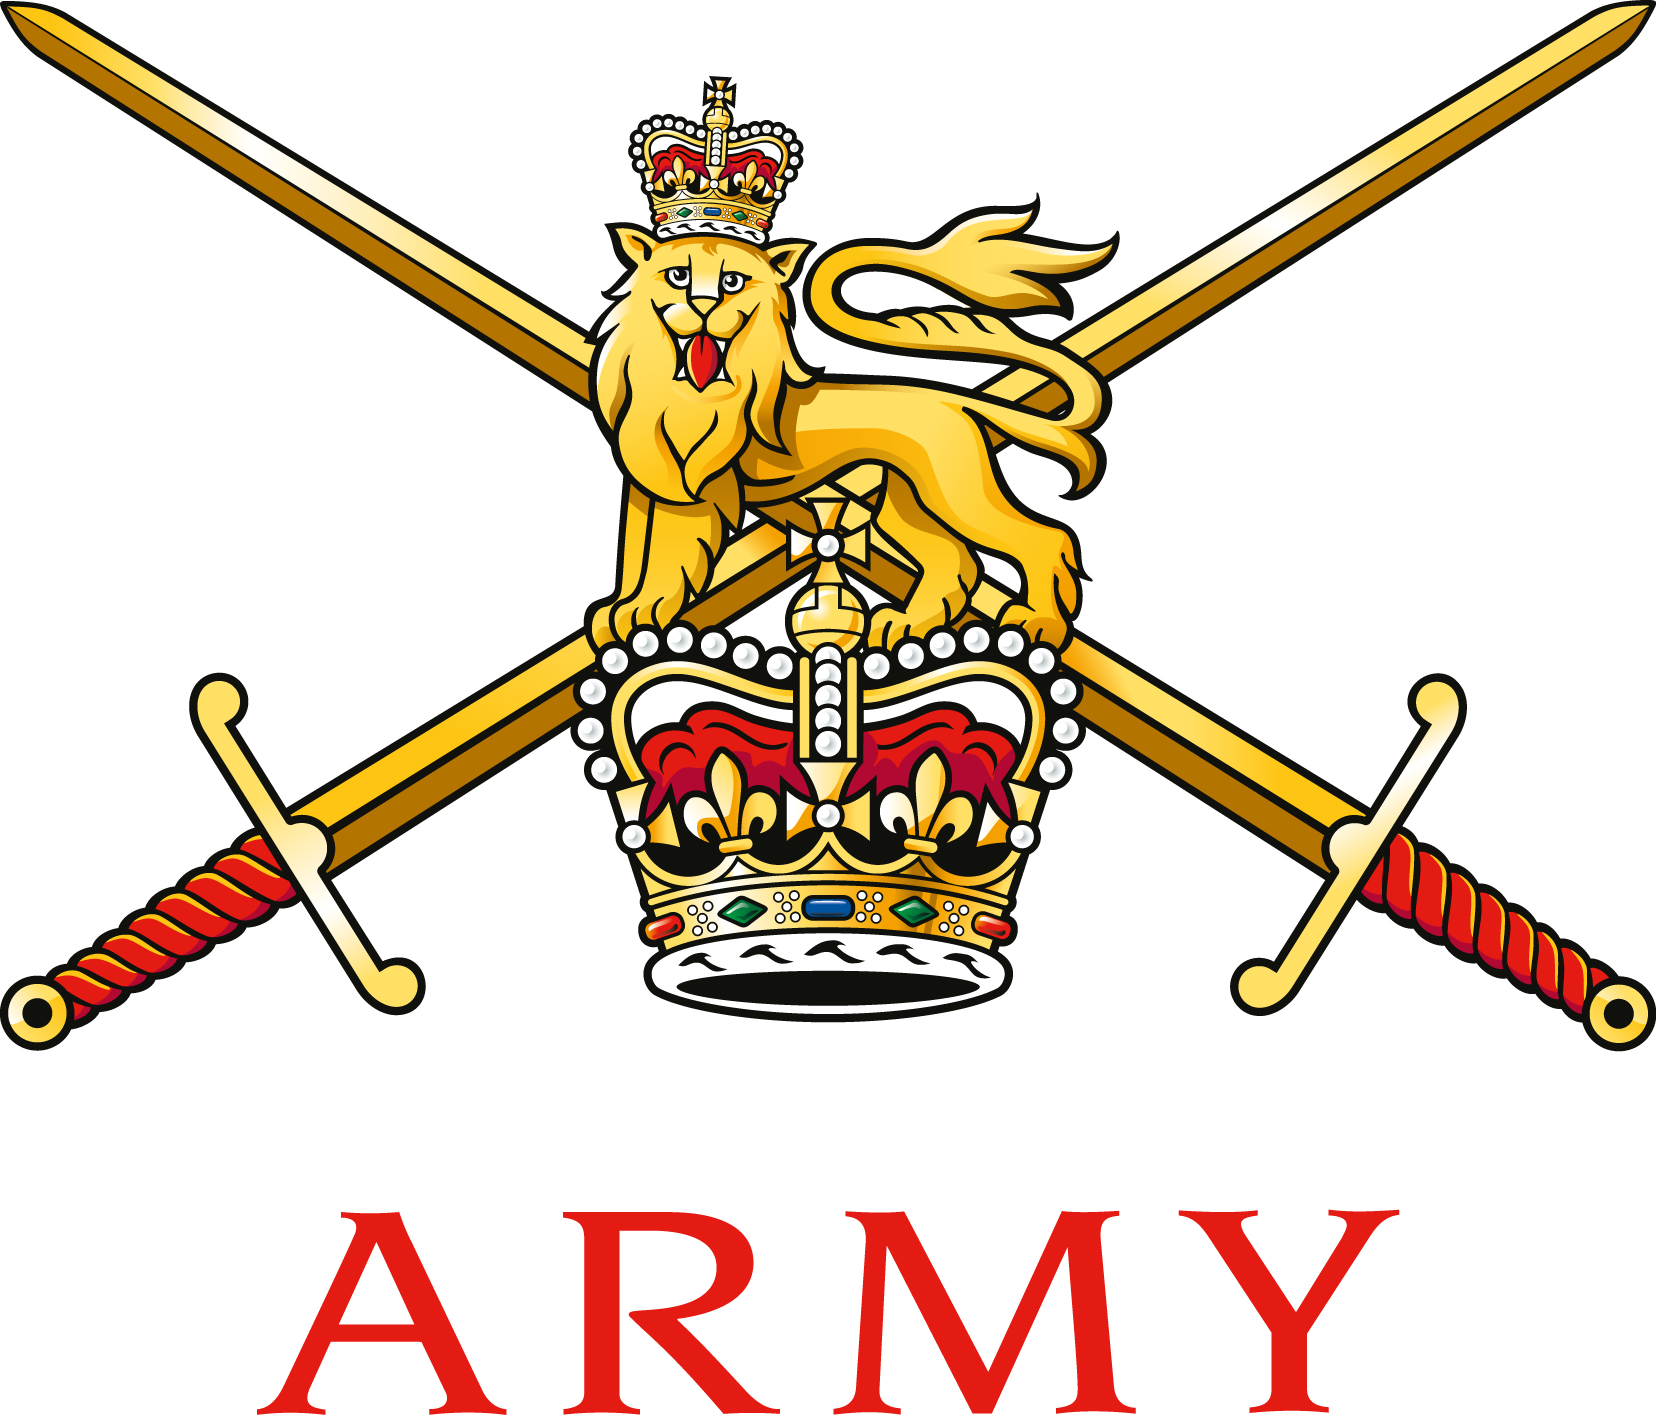 The British Army Logo